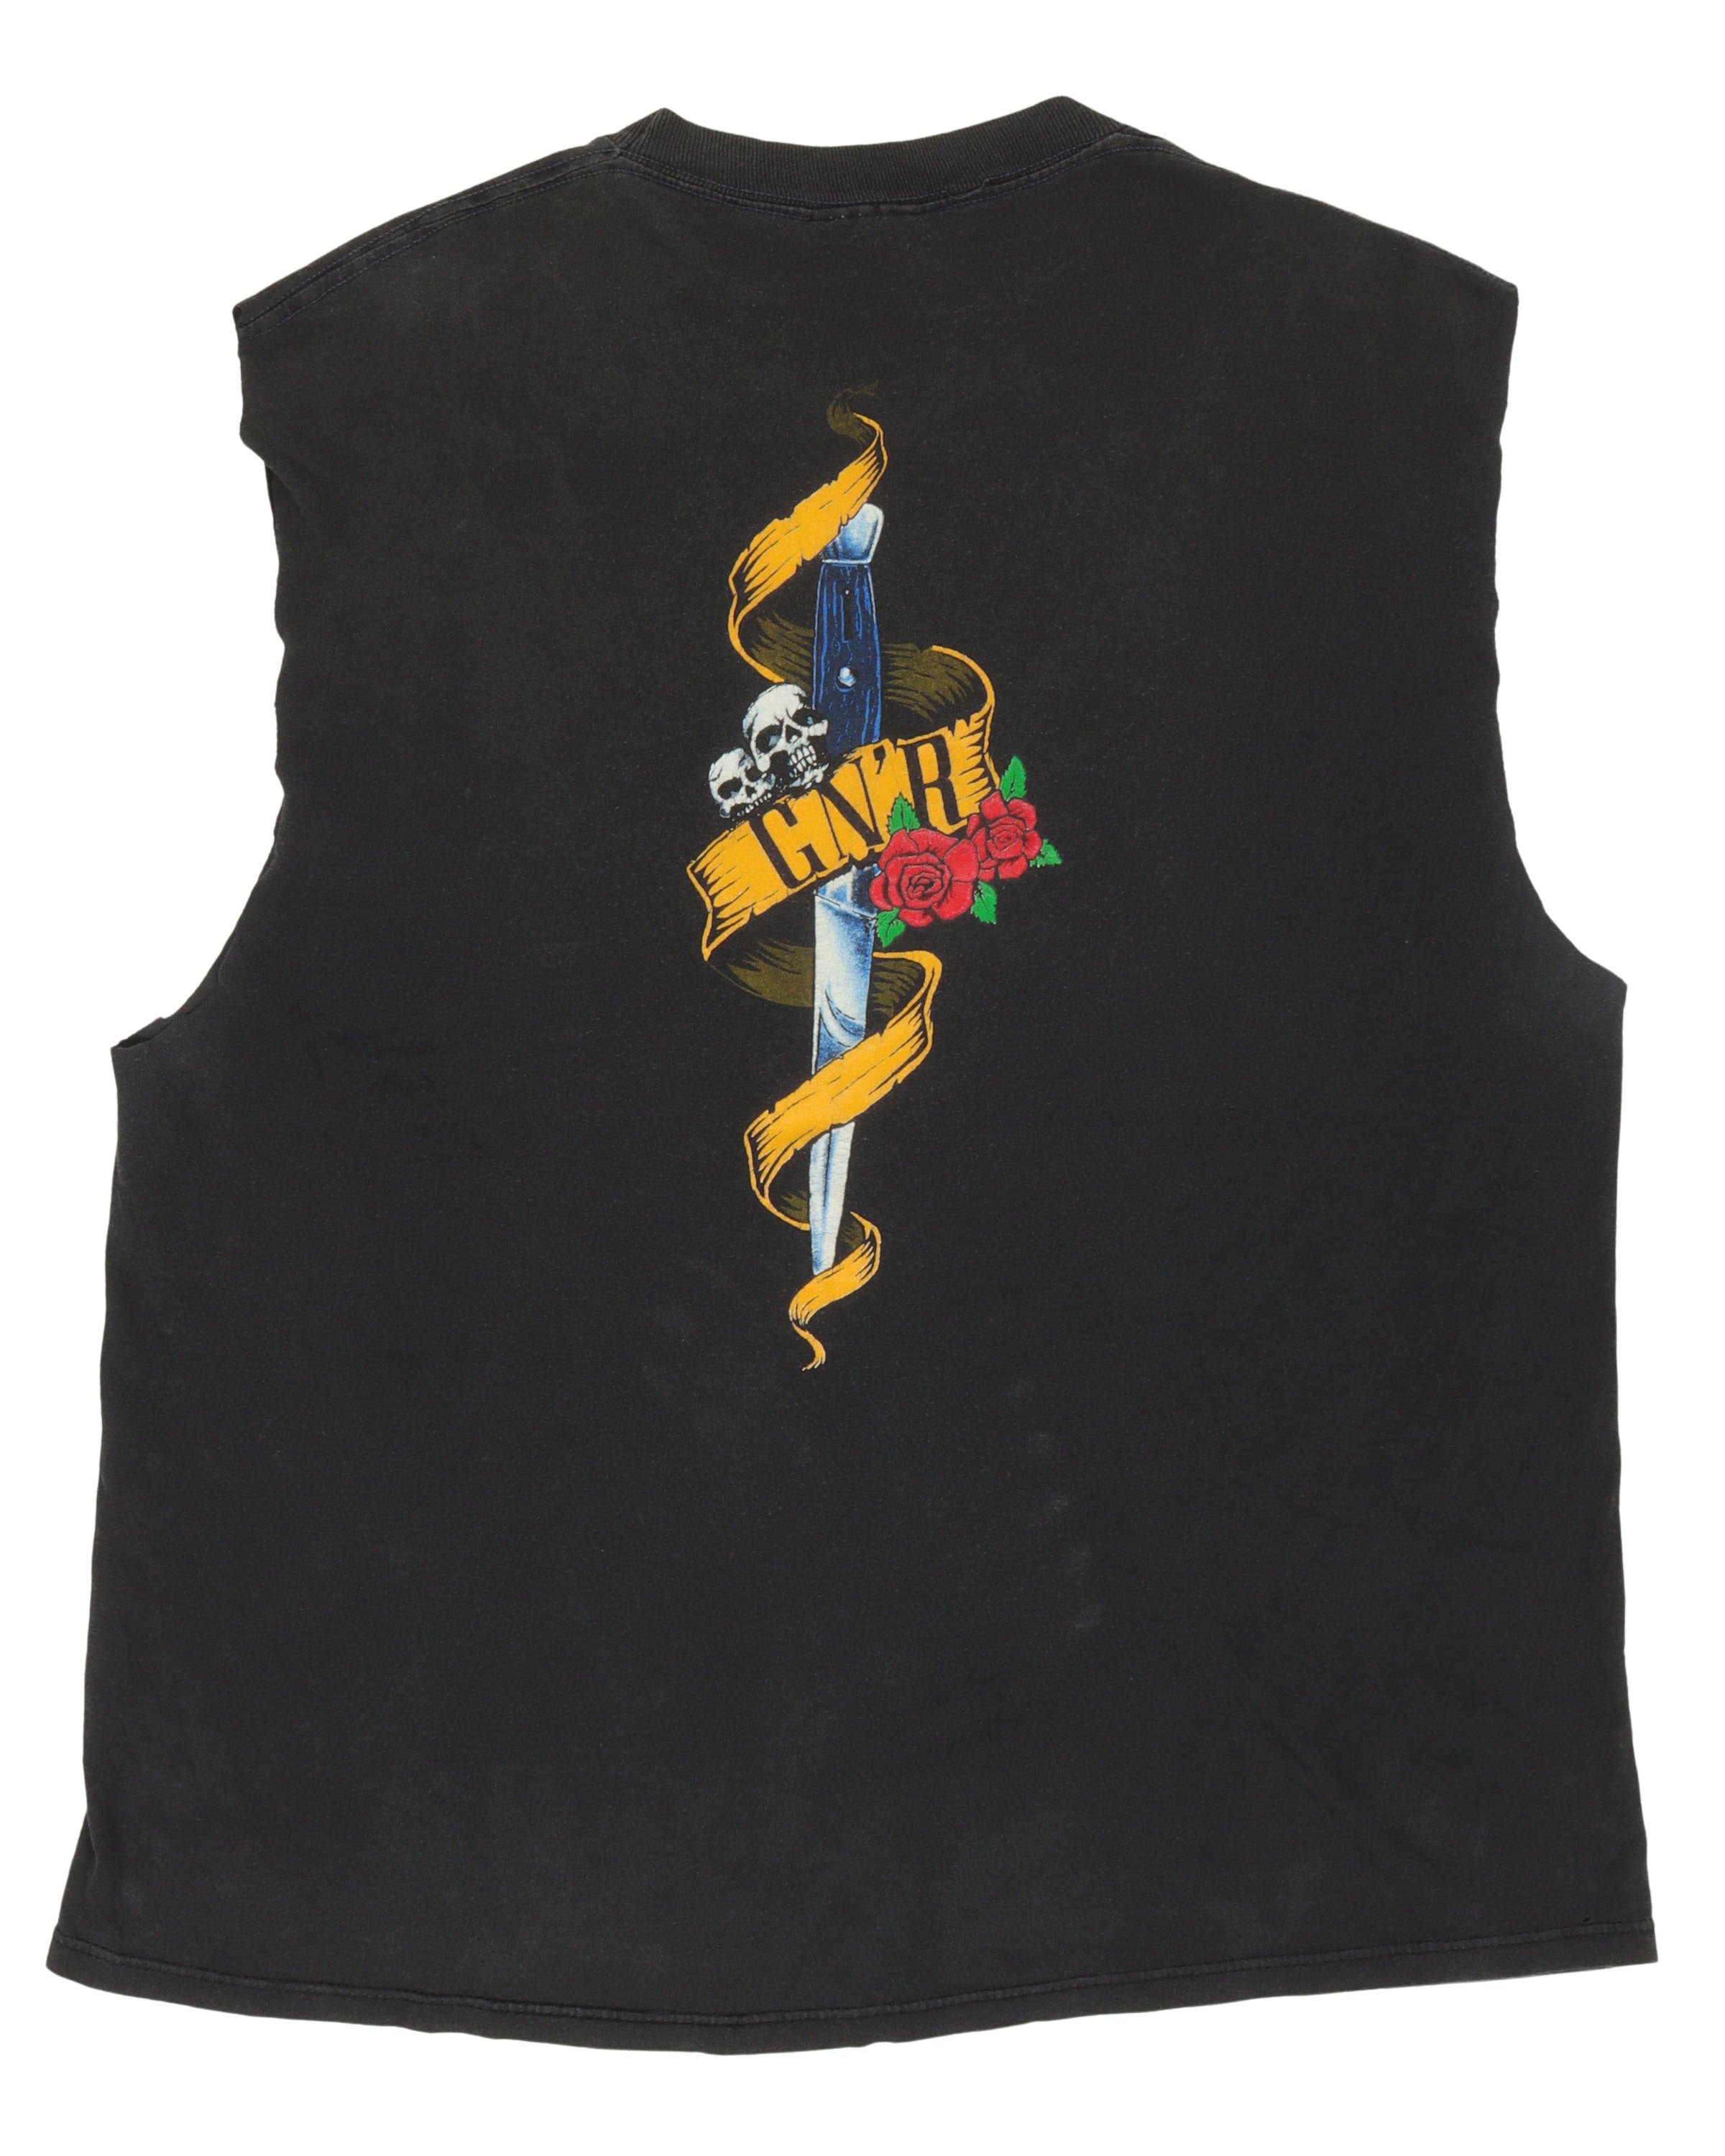 Guns N' Roses Dagger Sleeveless T-Shirt